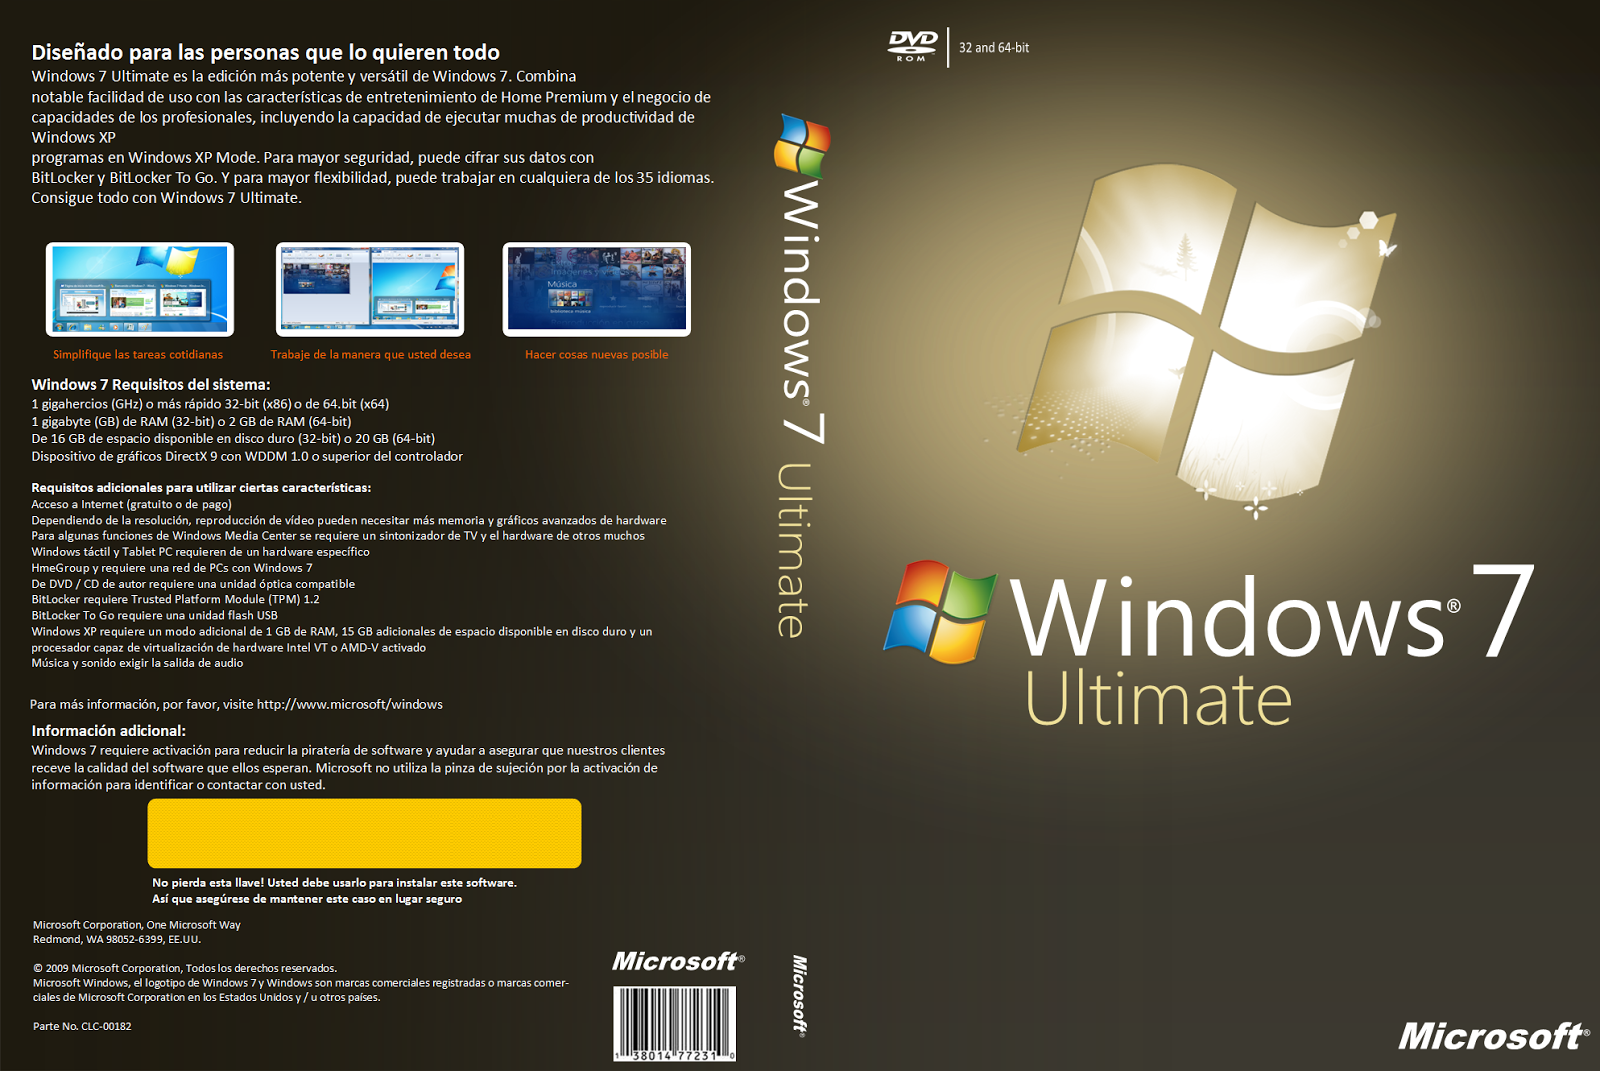 download windows 7 iso 32 bit full version free